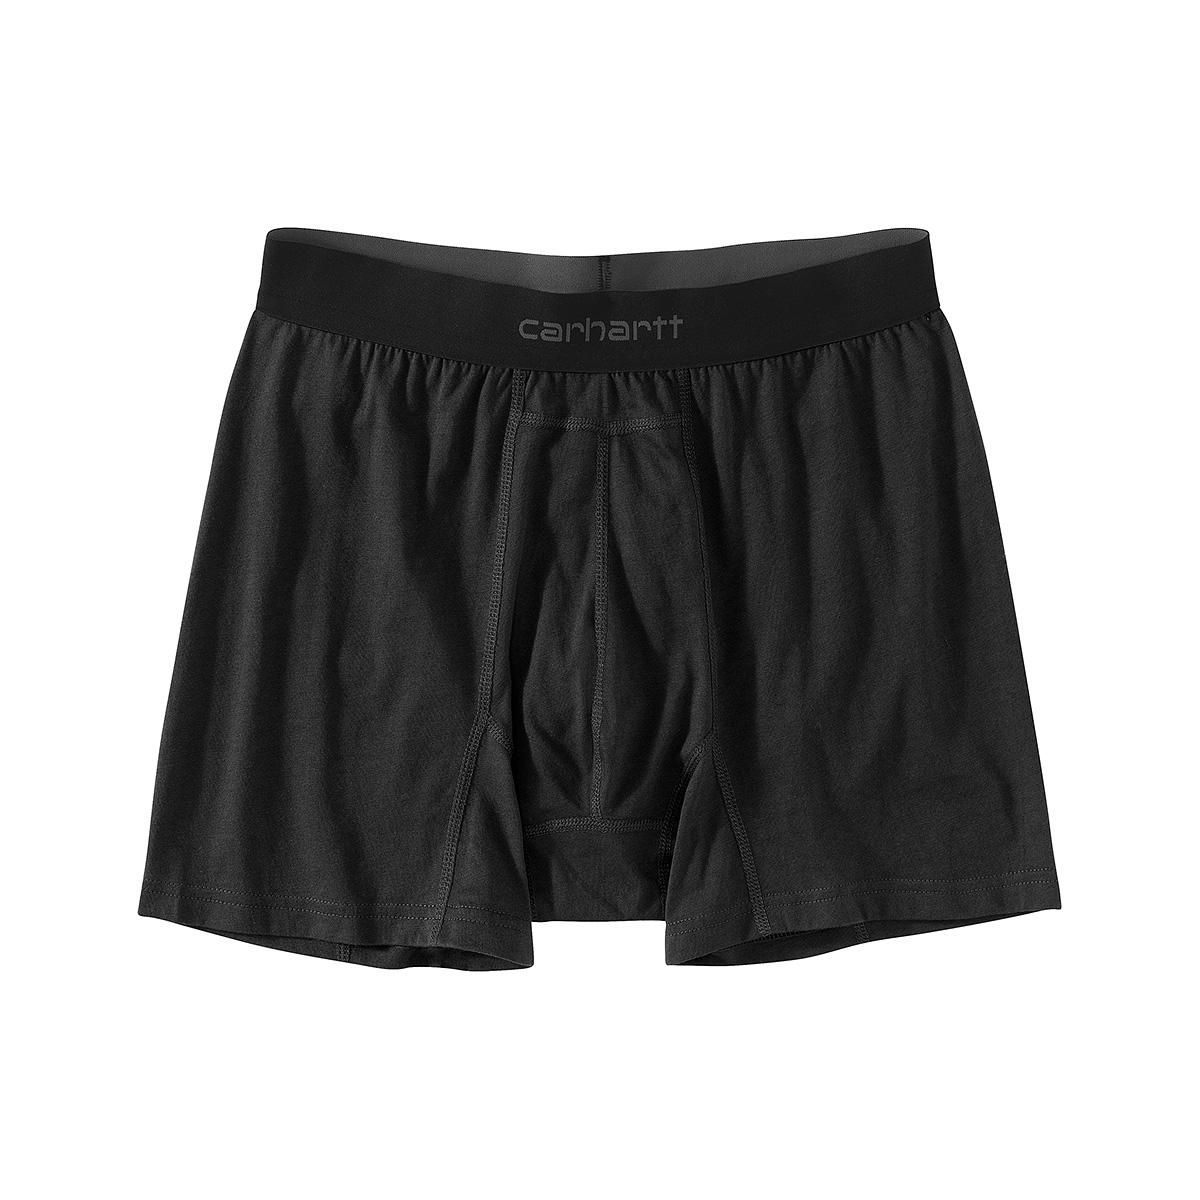 Knit Jersey Trunks  Men's Underwear brand TOOT official website